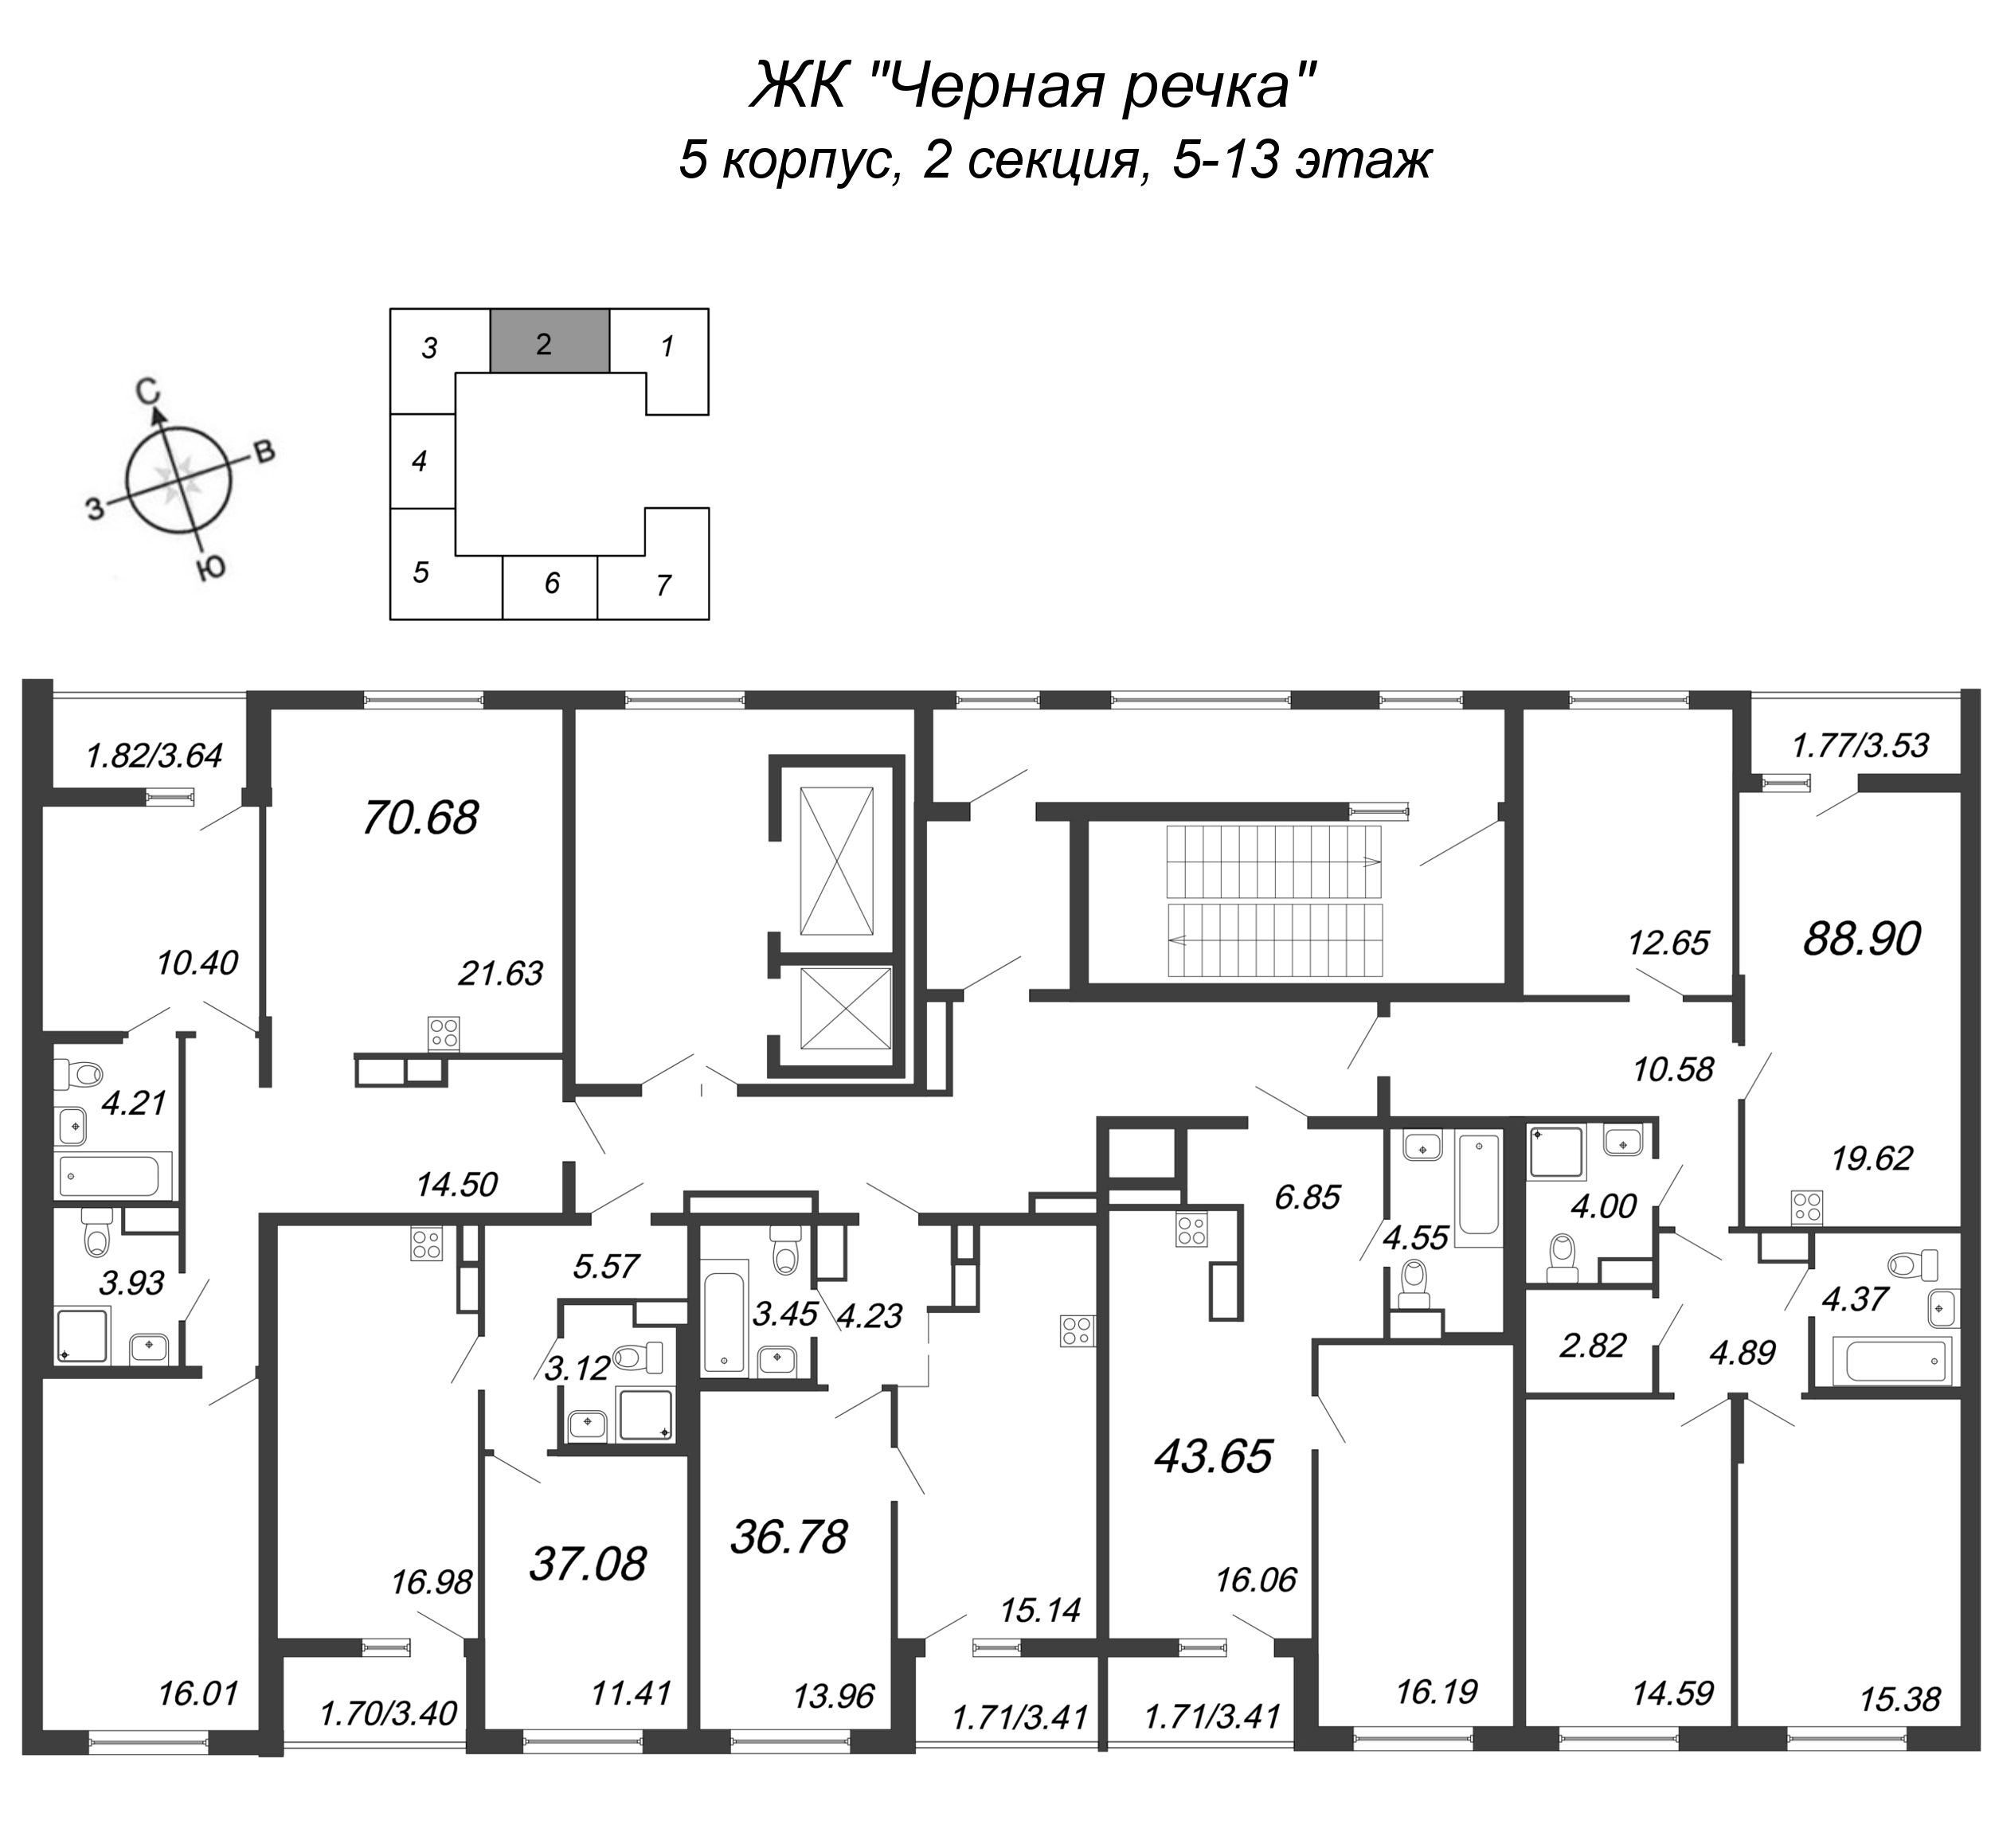 4-комнатная (Евро) квартира, 88.9 м² - планировка этажа